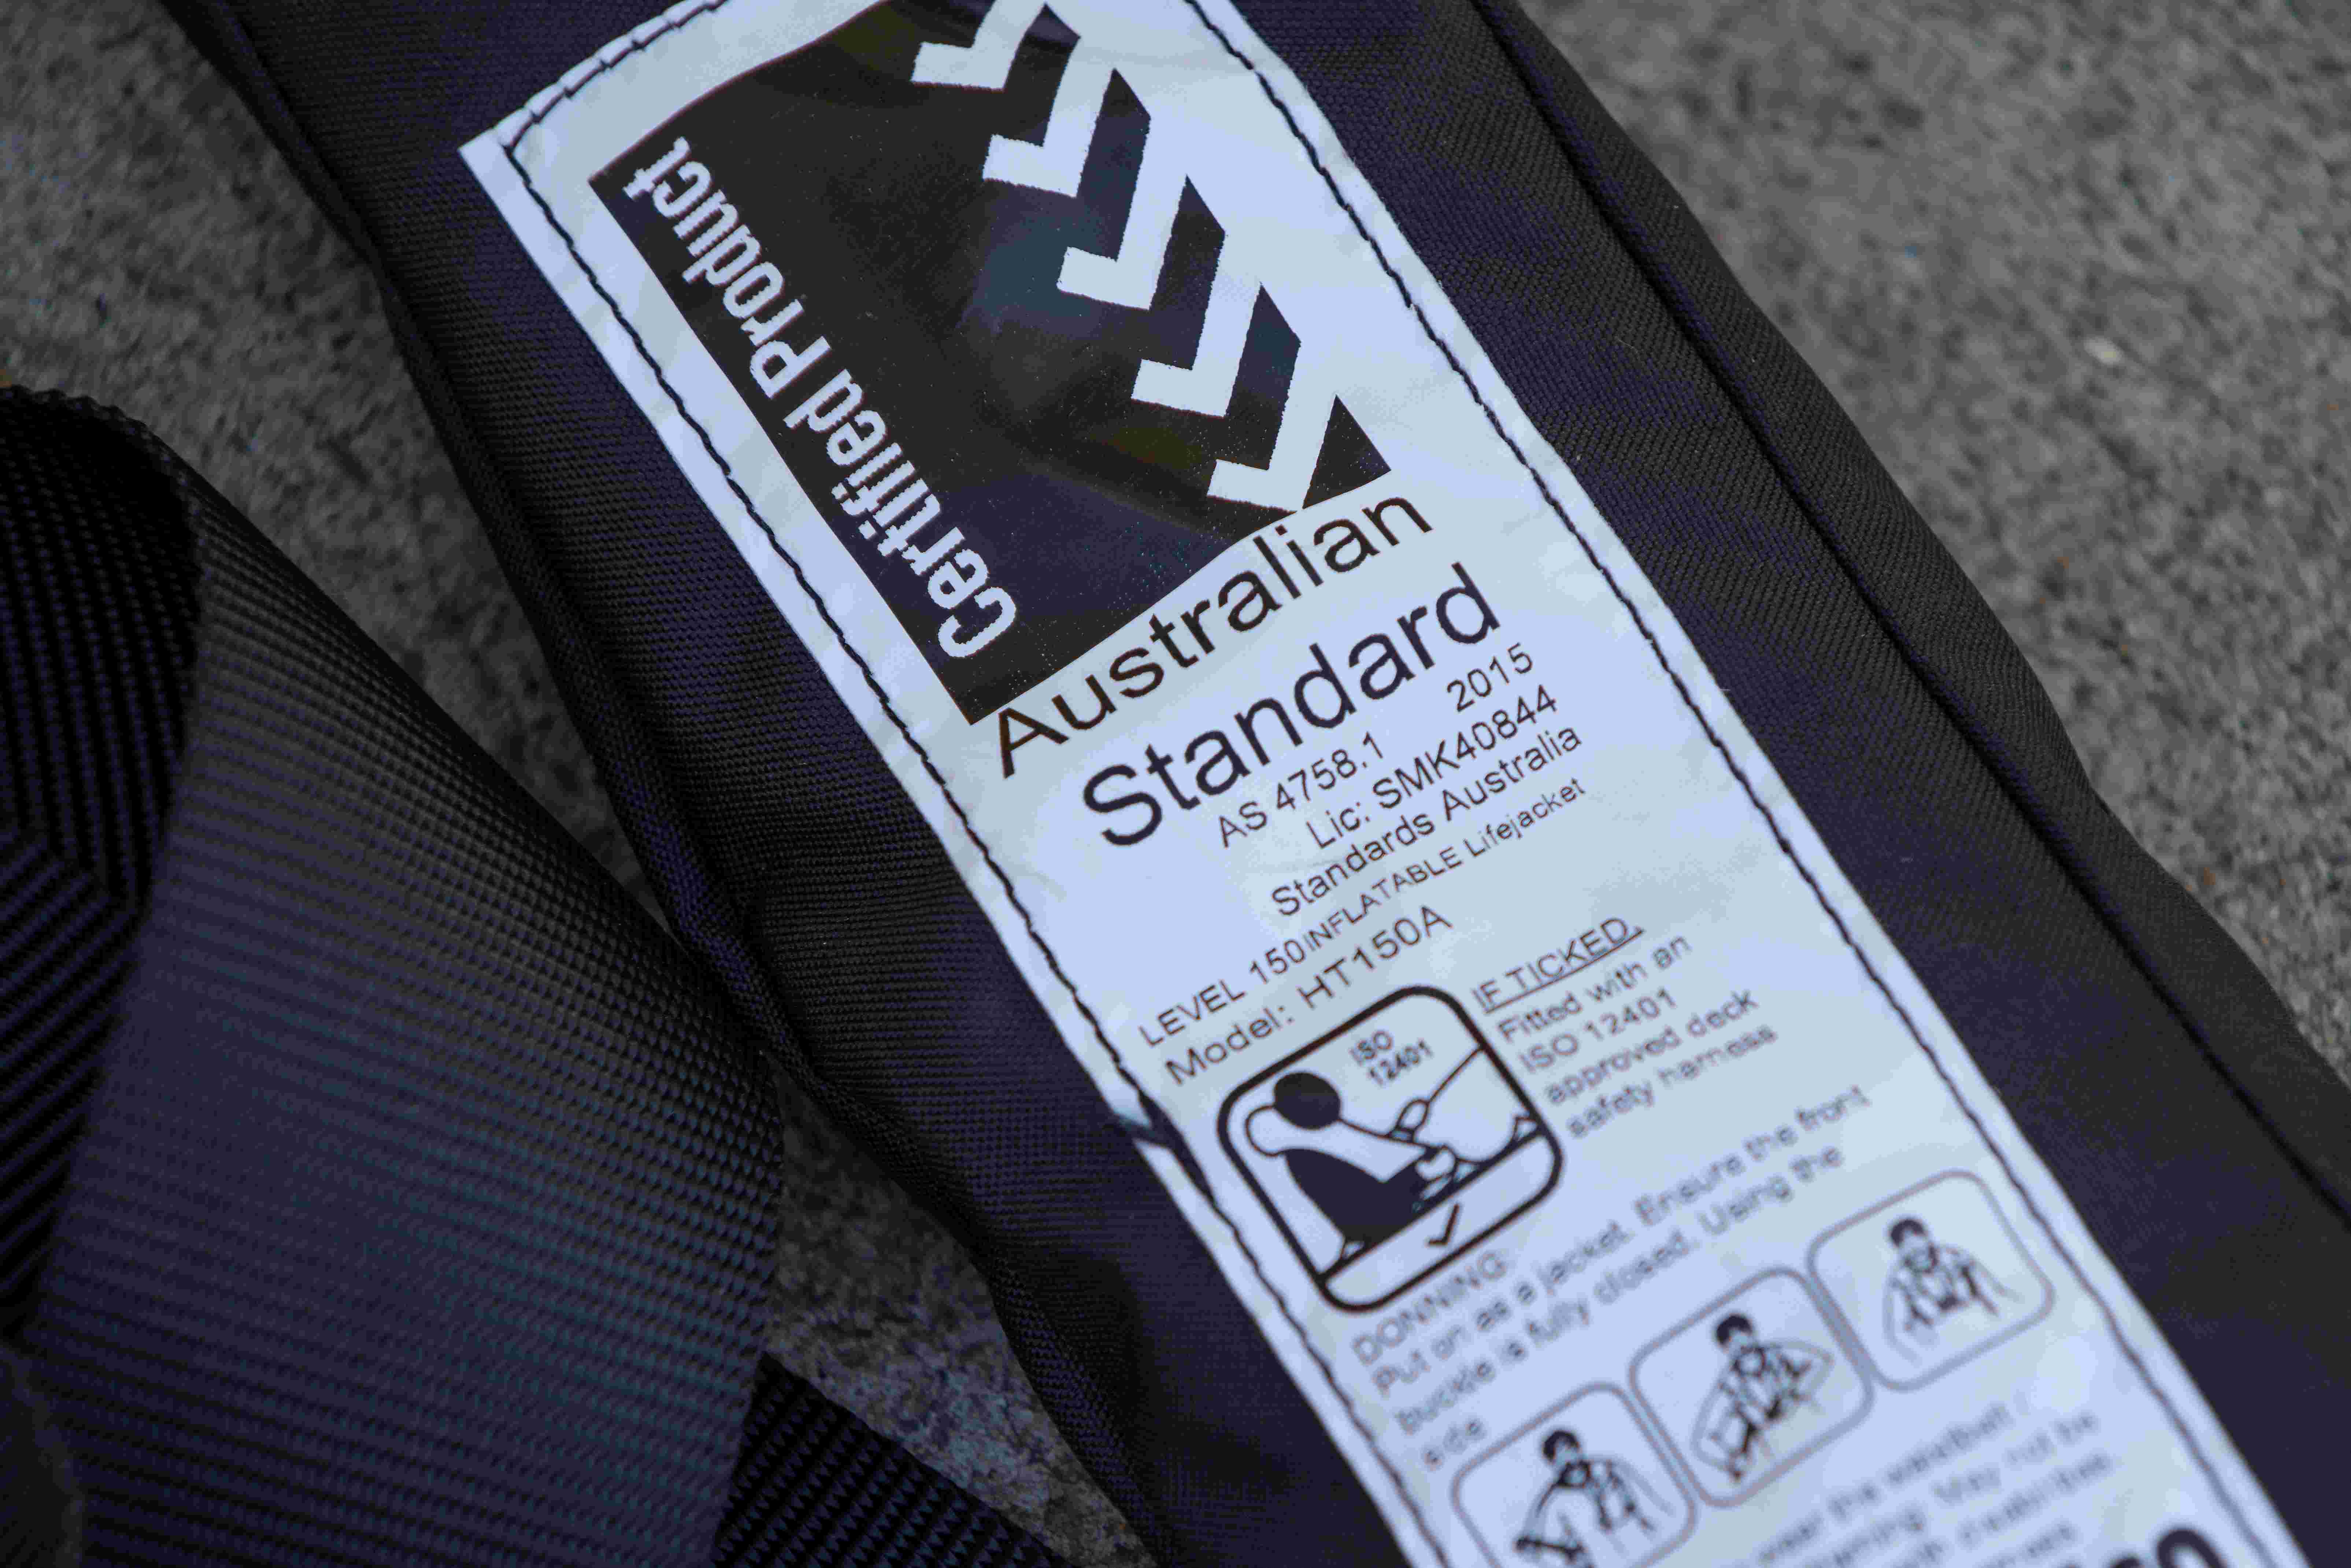 Australian standard 4758 shown on a lifejacket